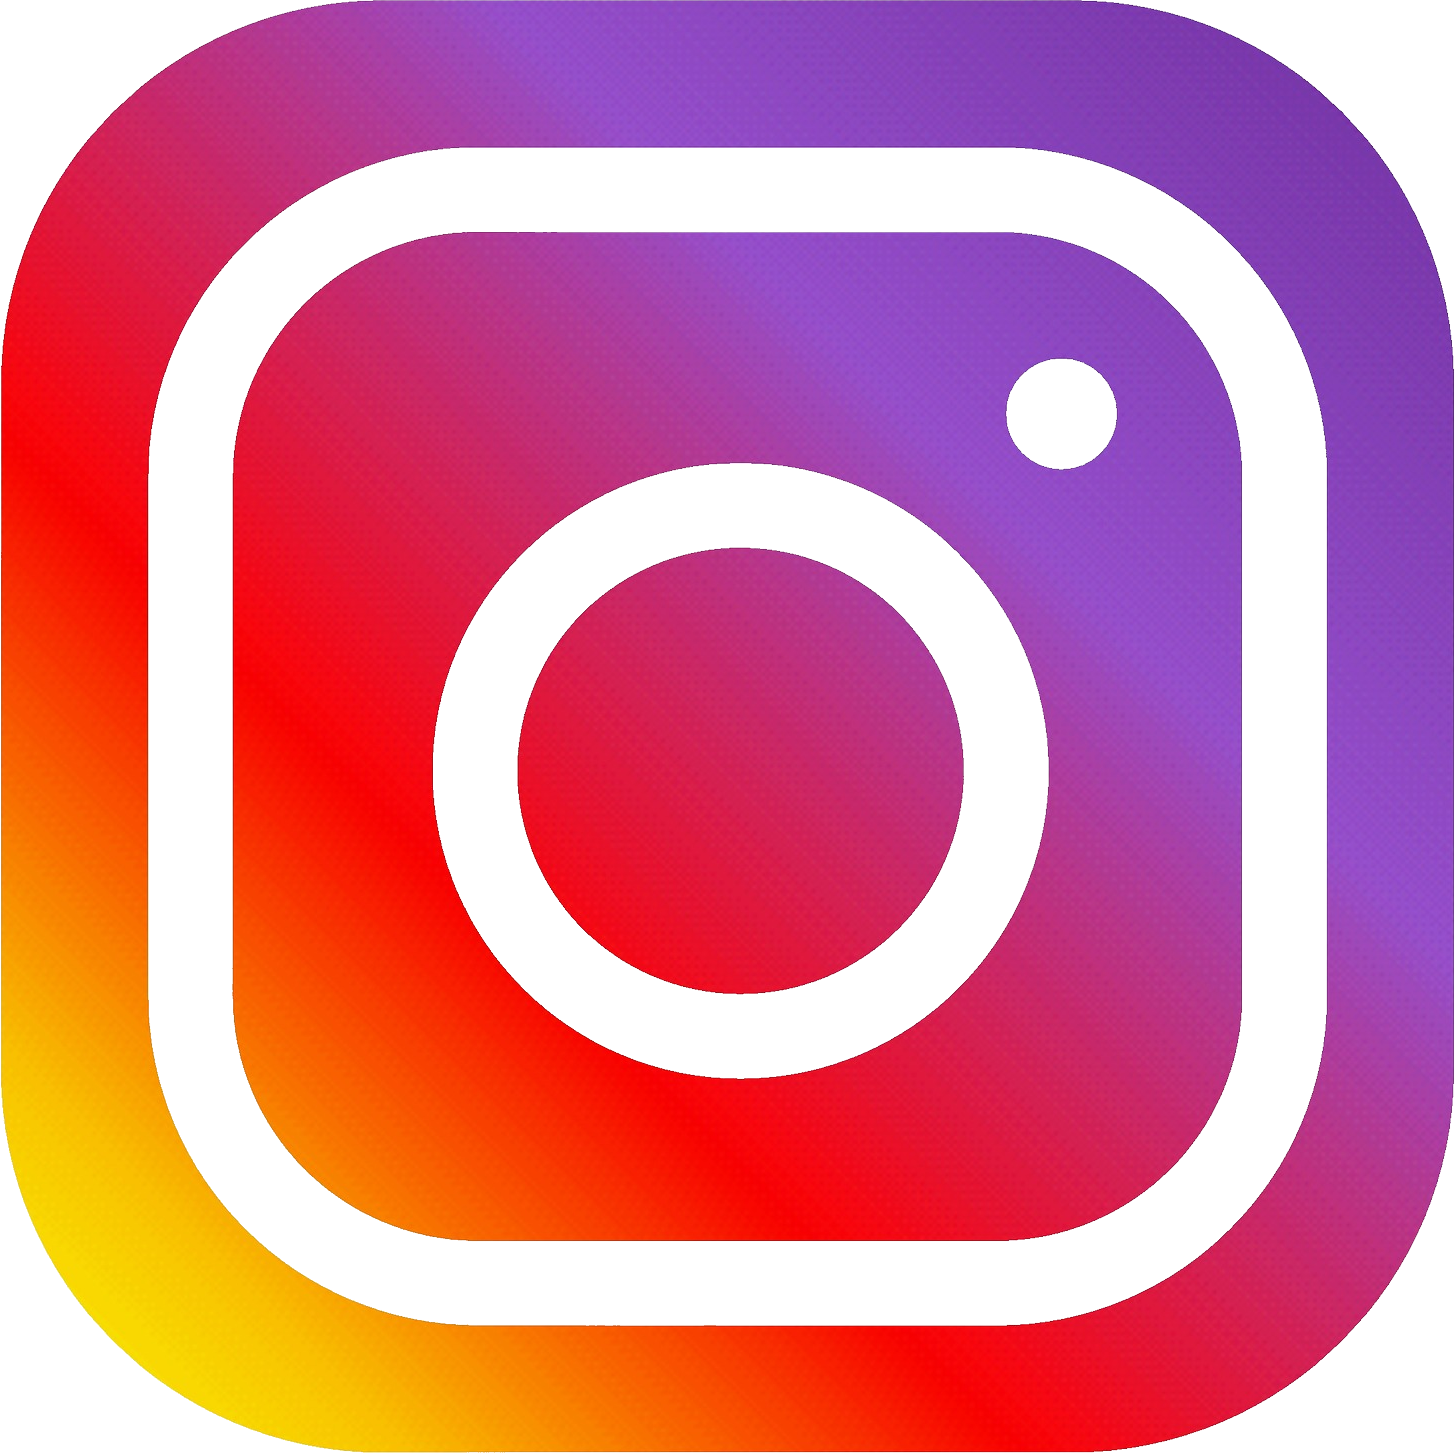 Instagram logo and link to dream club